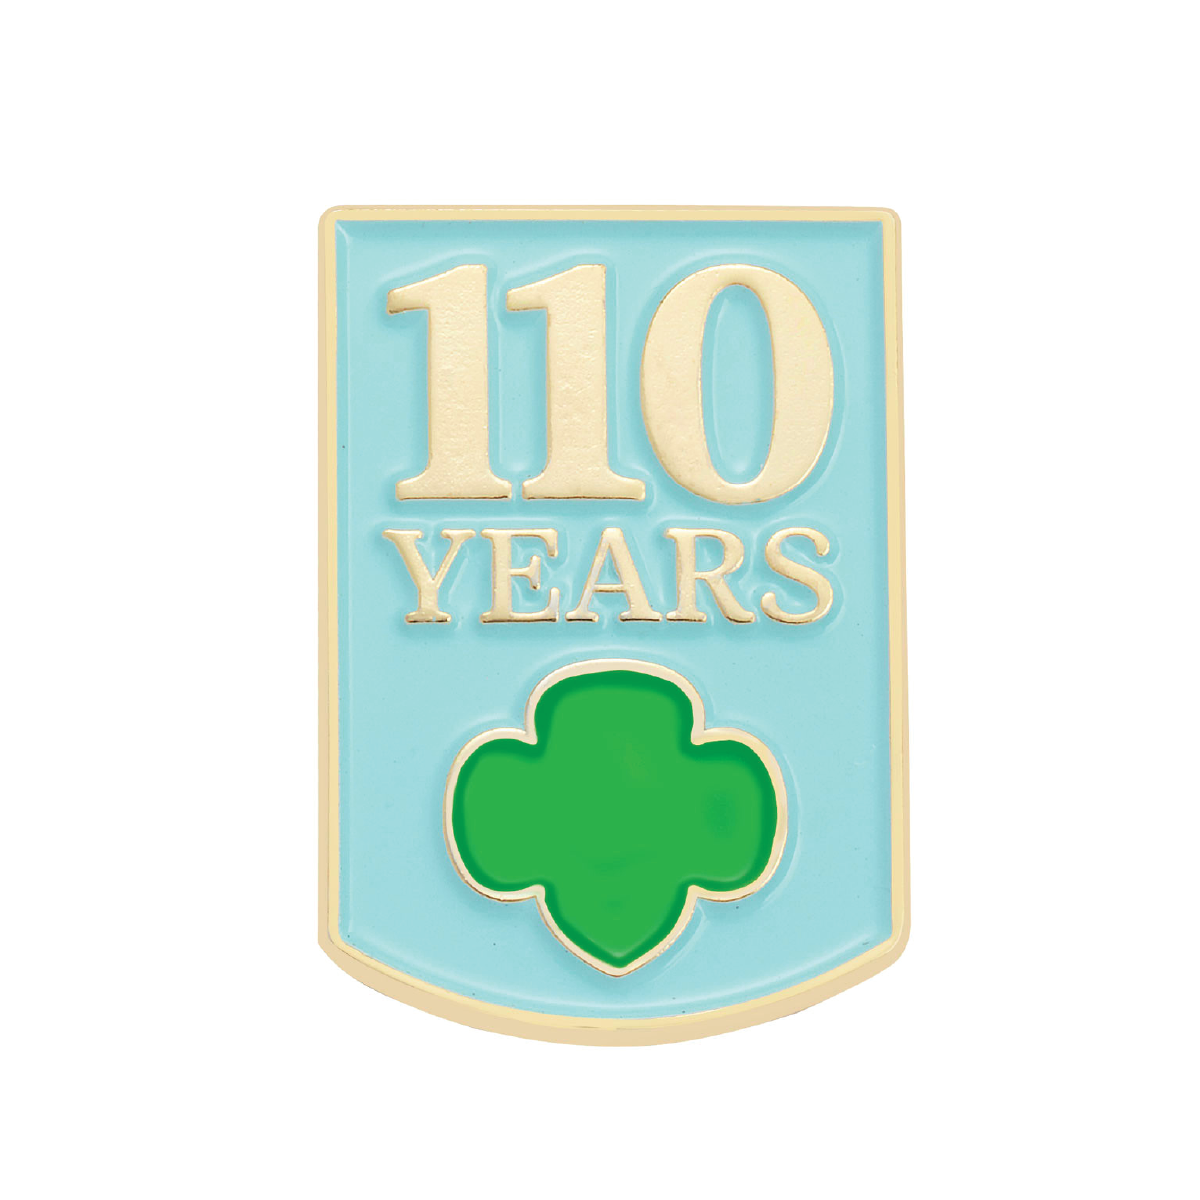 110 Years Pin